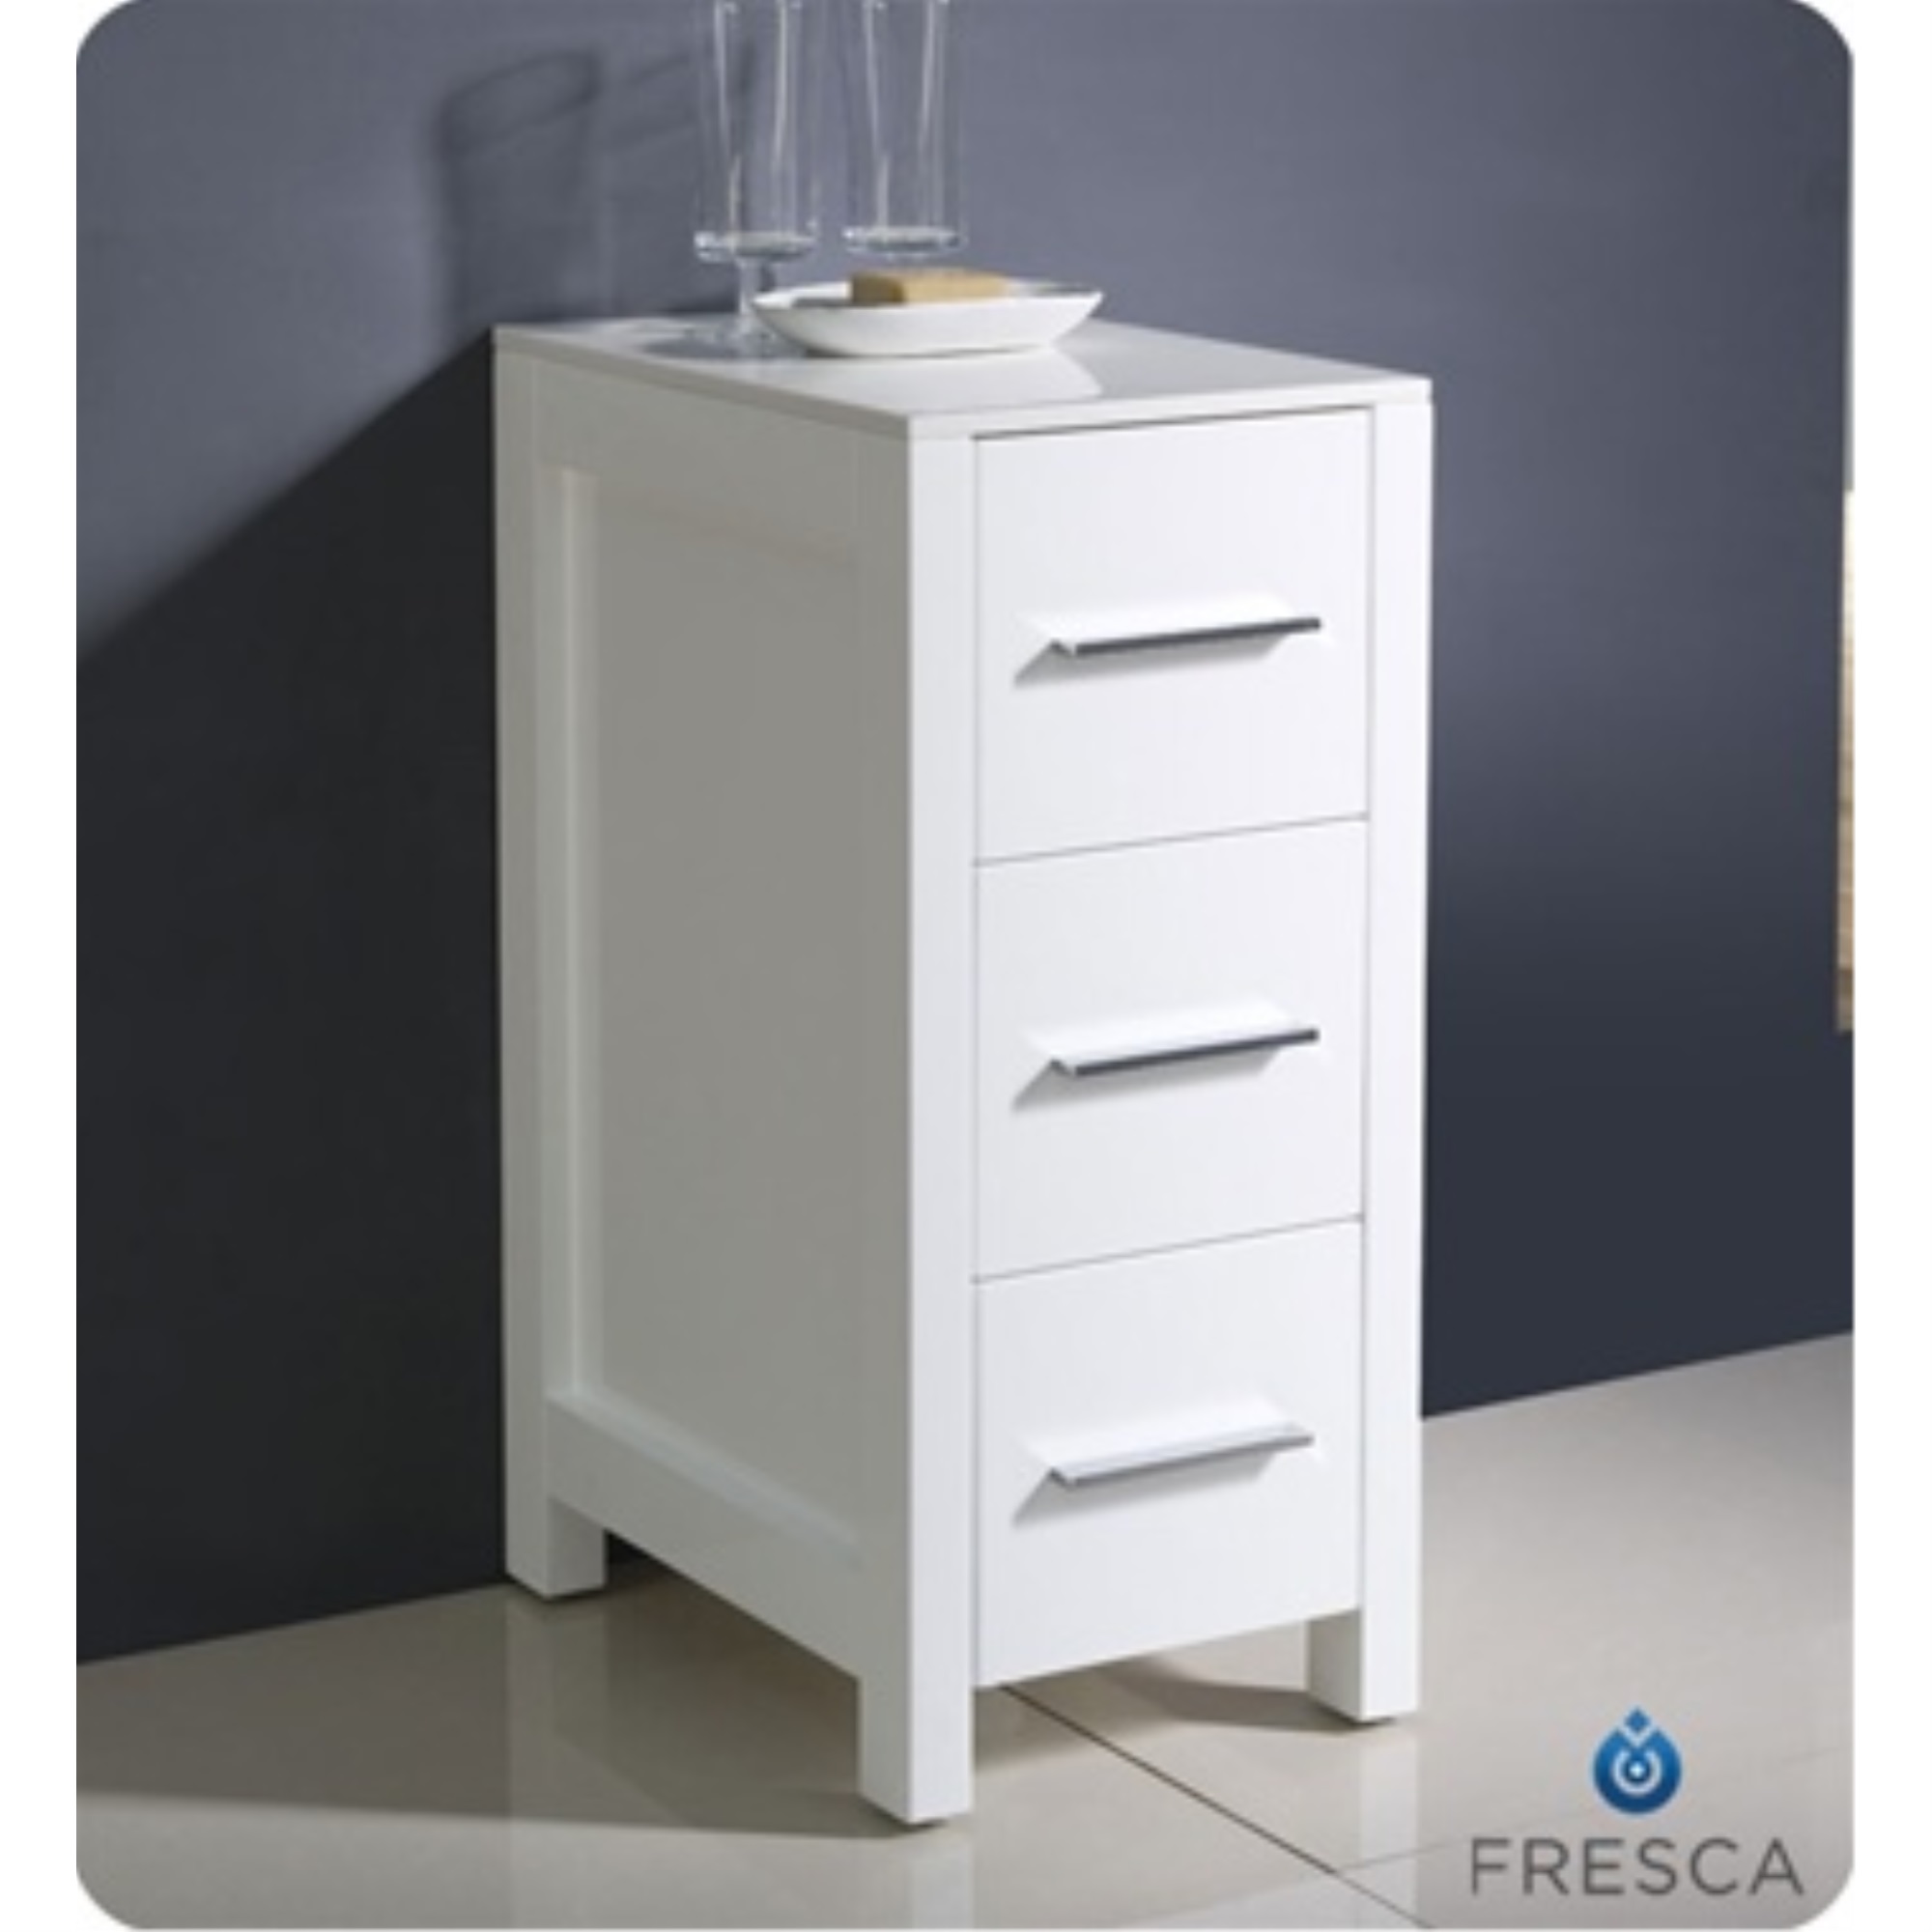 Fresca Torino Bathroom Linen Side Cabinet in White - image 1 of 5